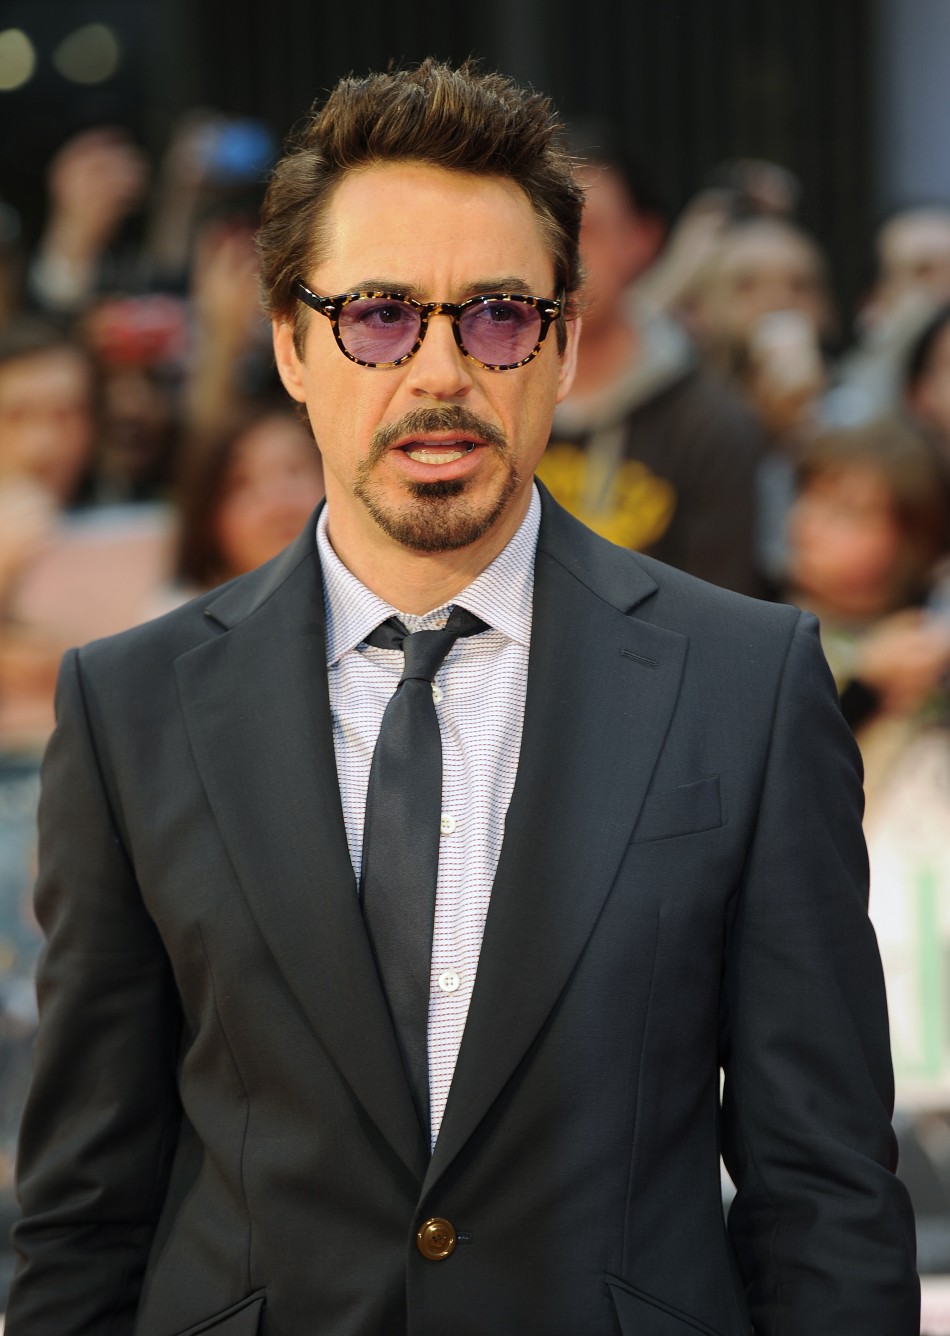 Robert Downey Jr. in European Avengers Premiere Red Carpet